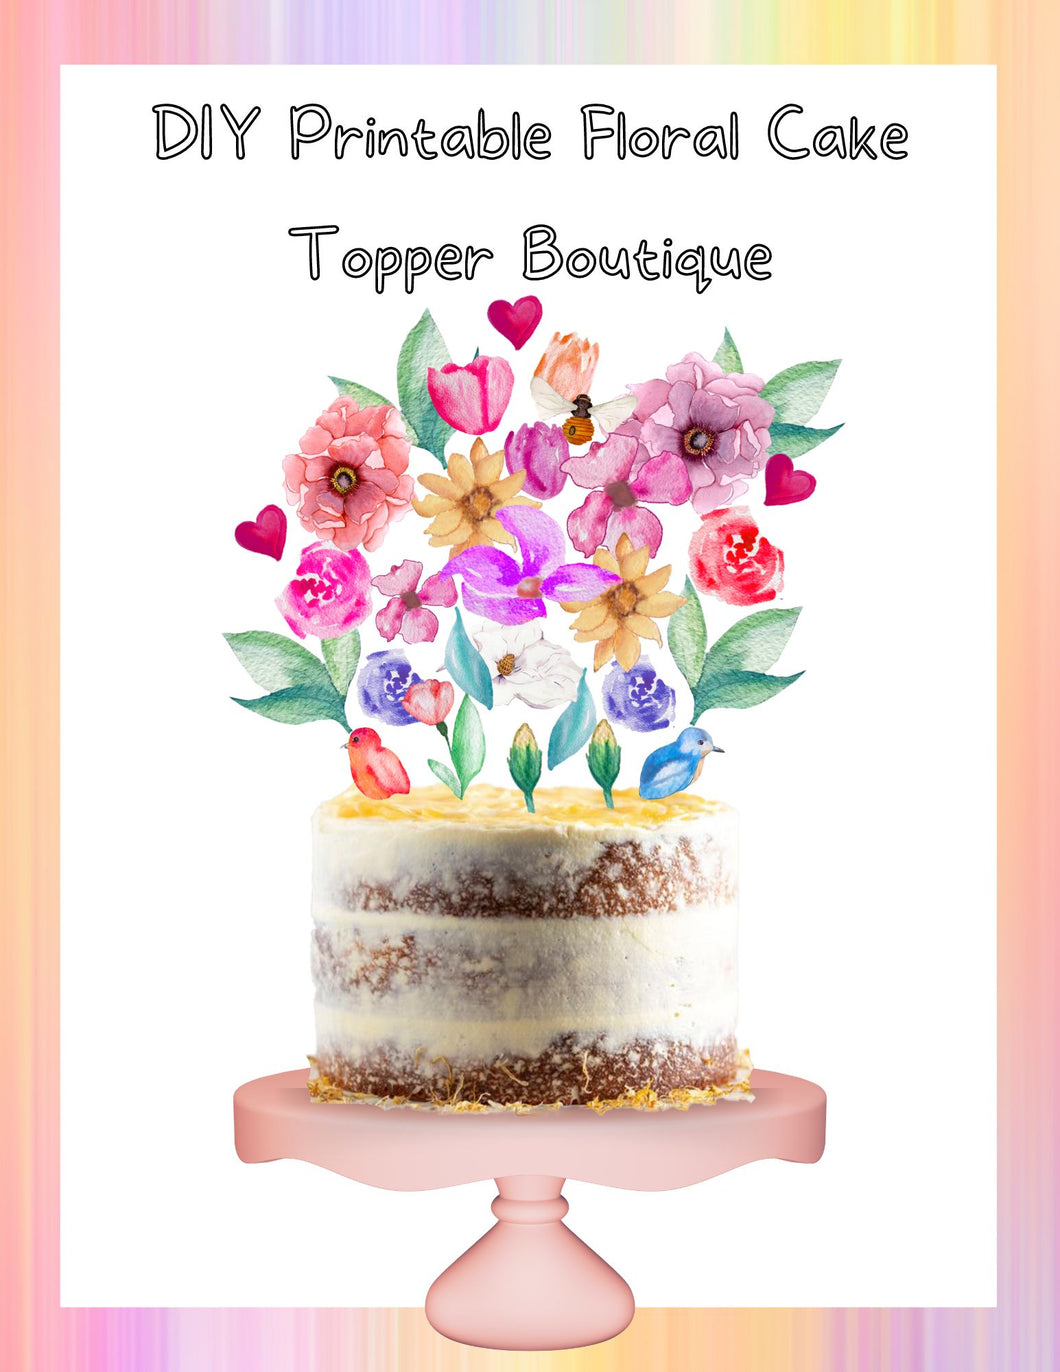 DIY Printable Floral Cake Topper Bouquet